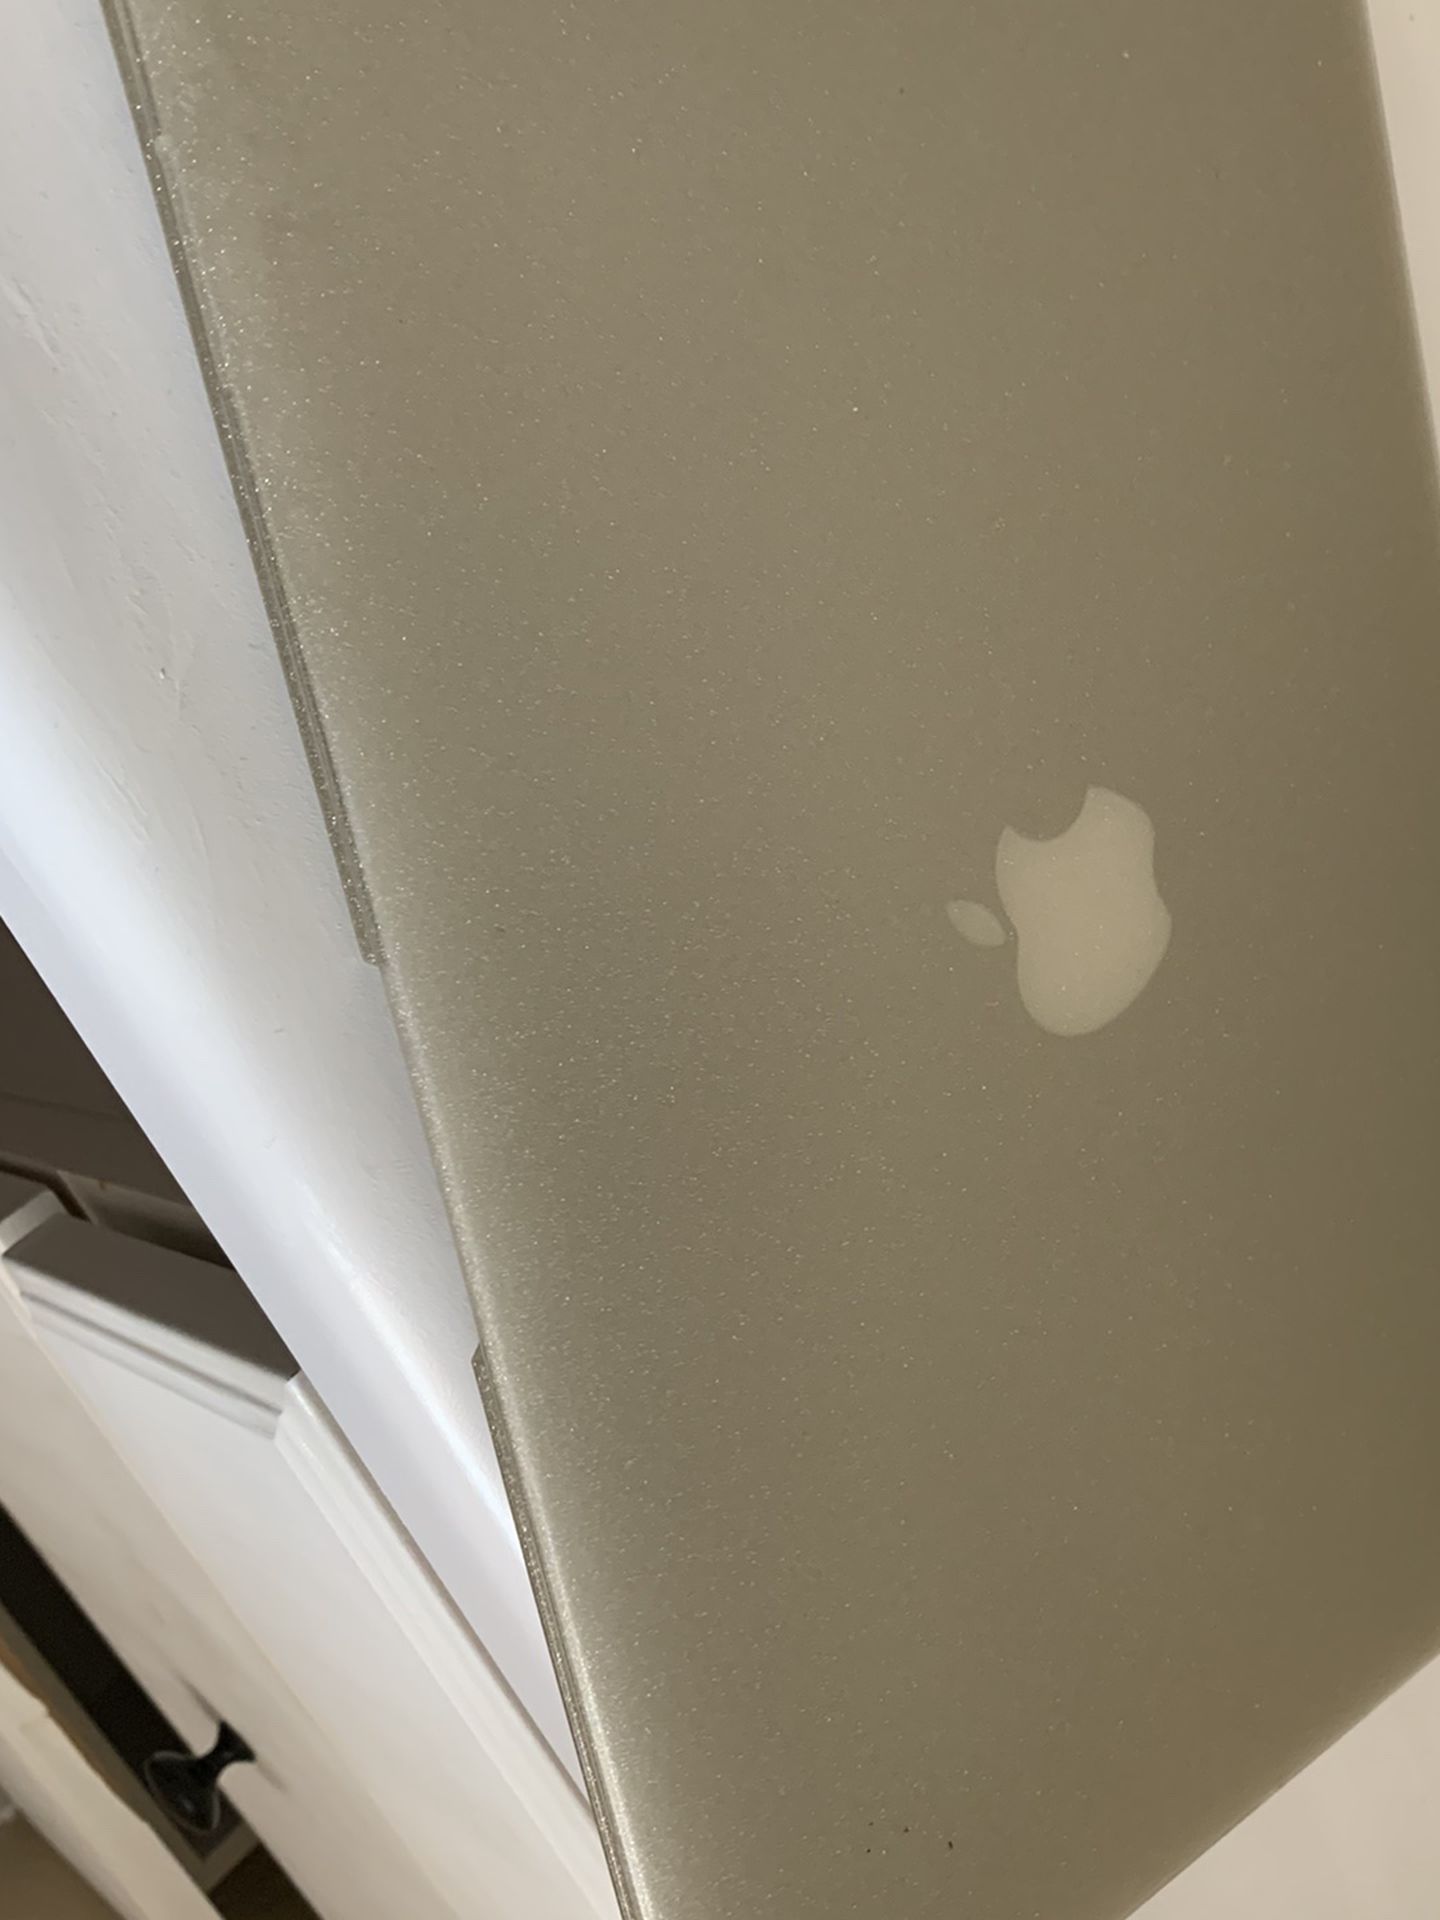 apple Macbook laptop